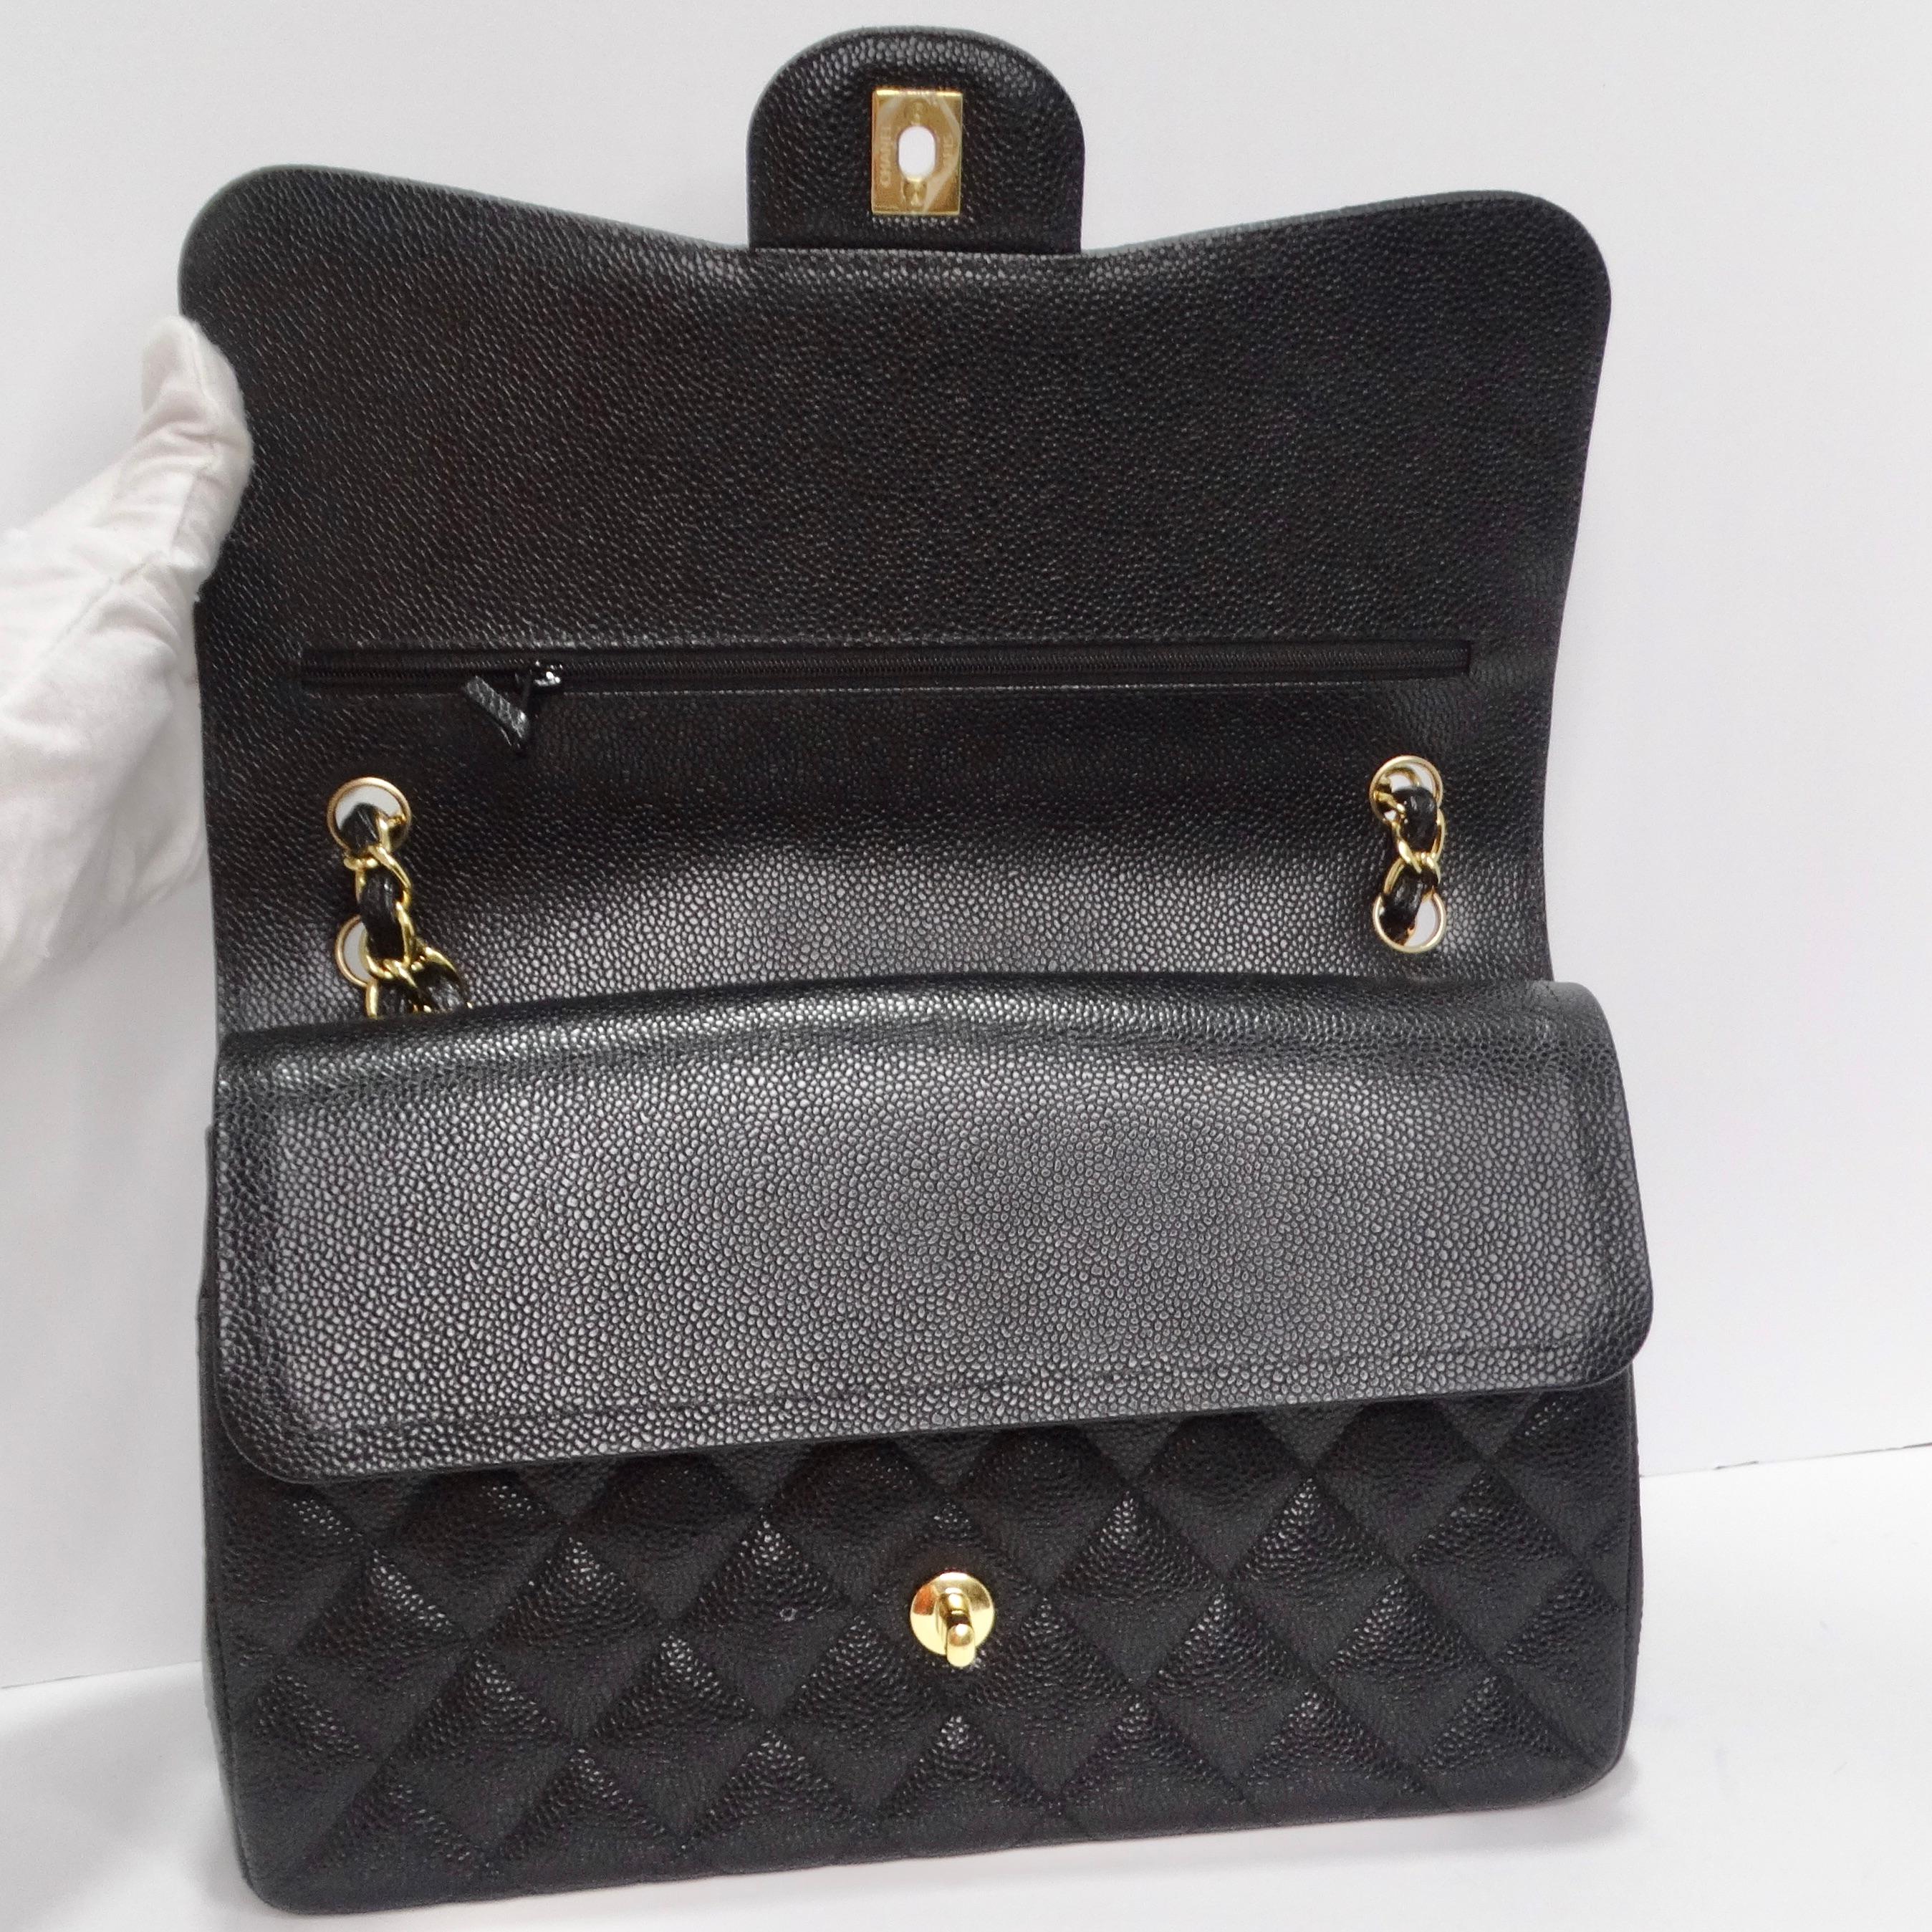 Chanel Large Classic Quilted Caviar Handbag Black/Burgundy 6